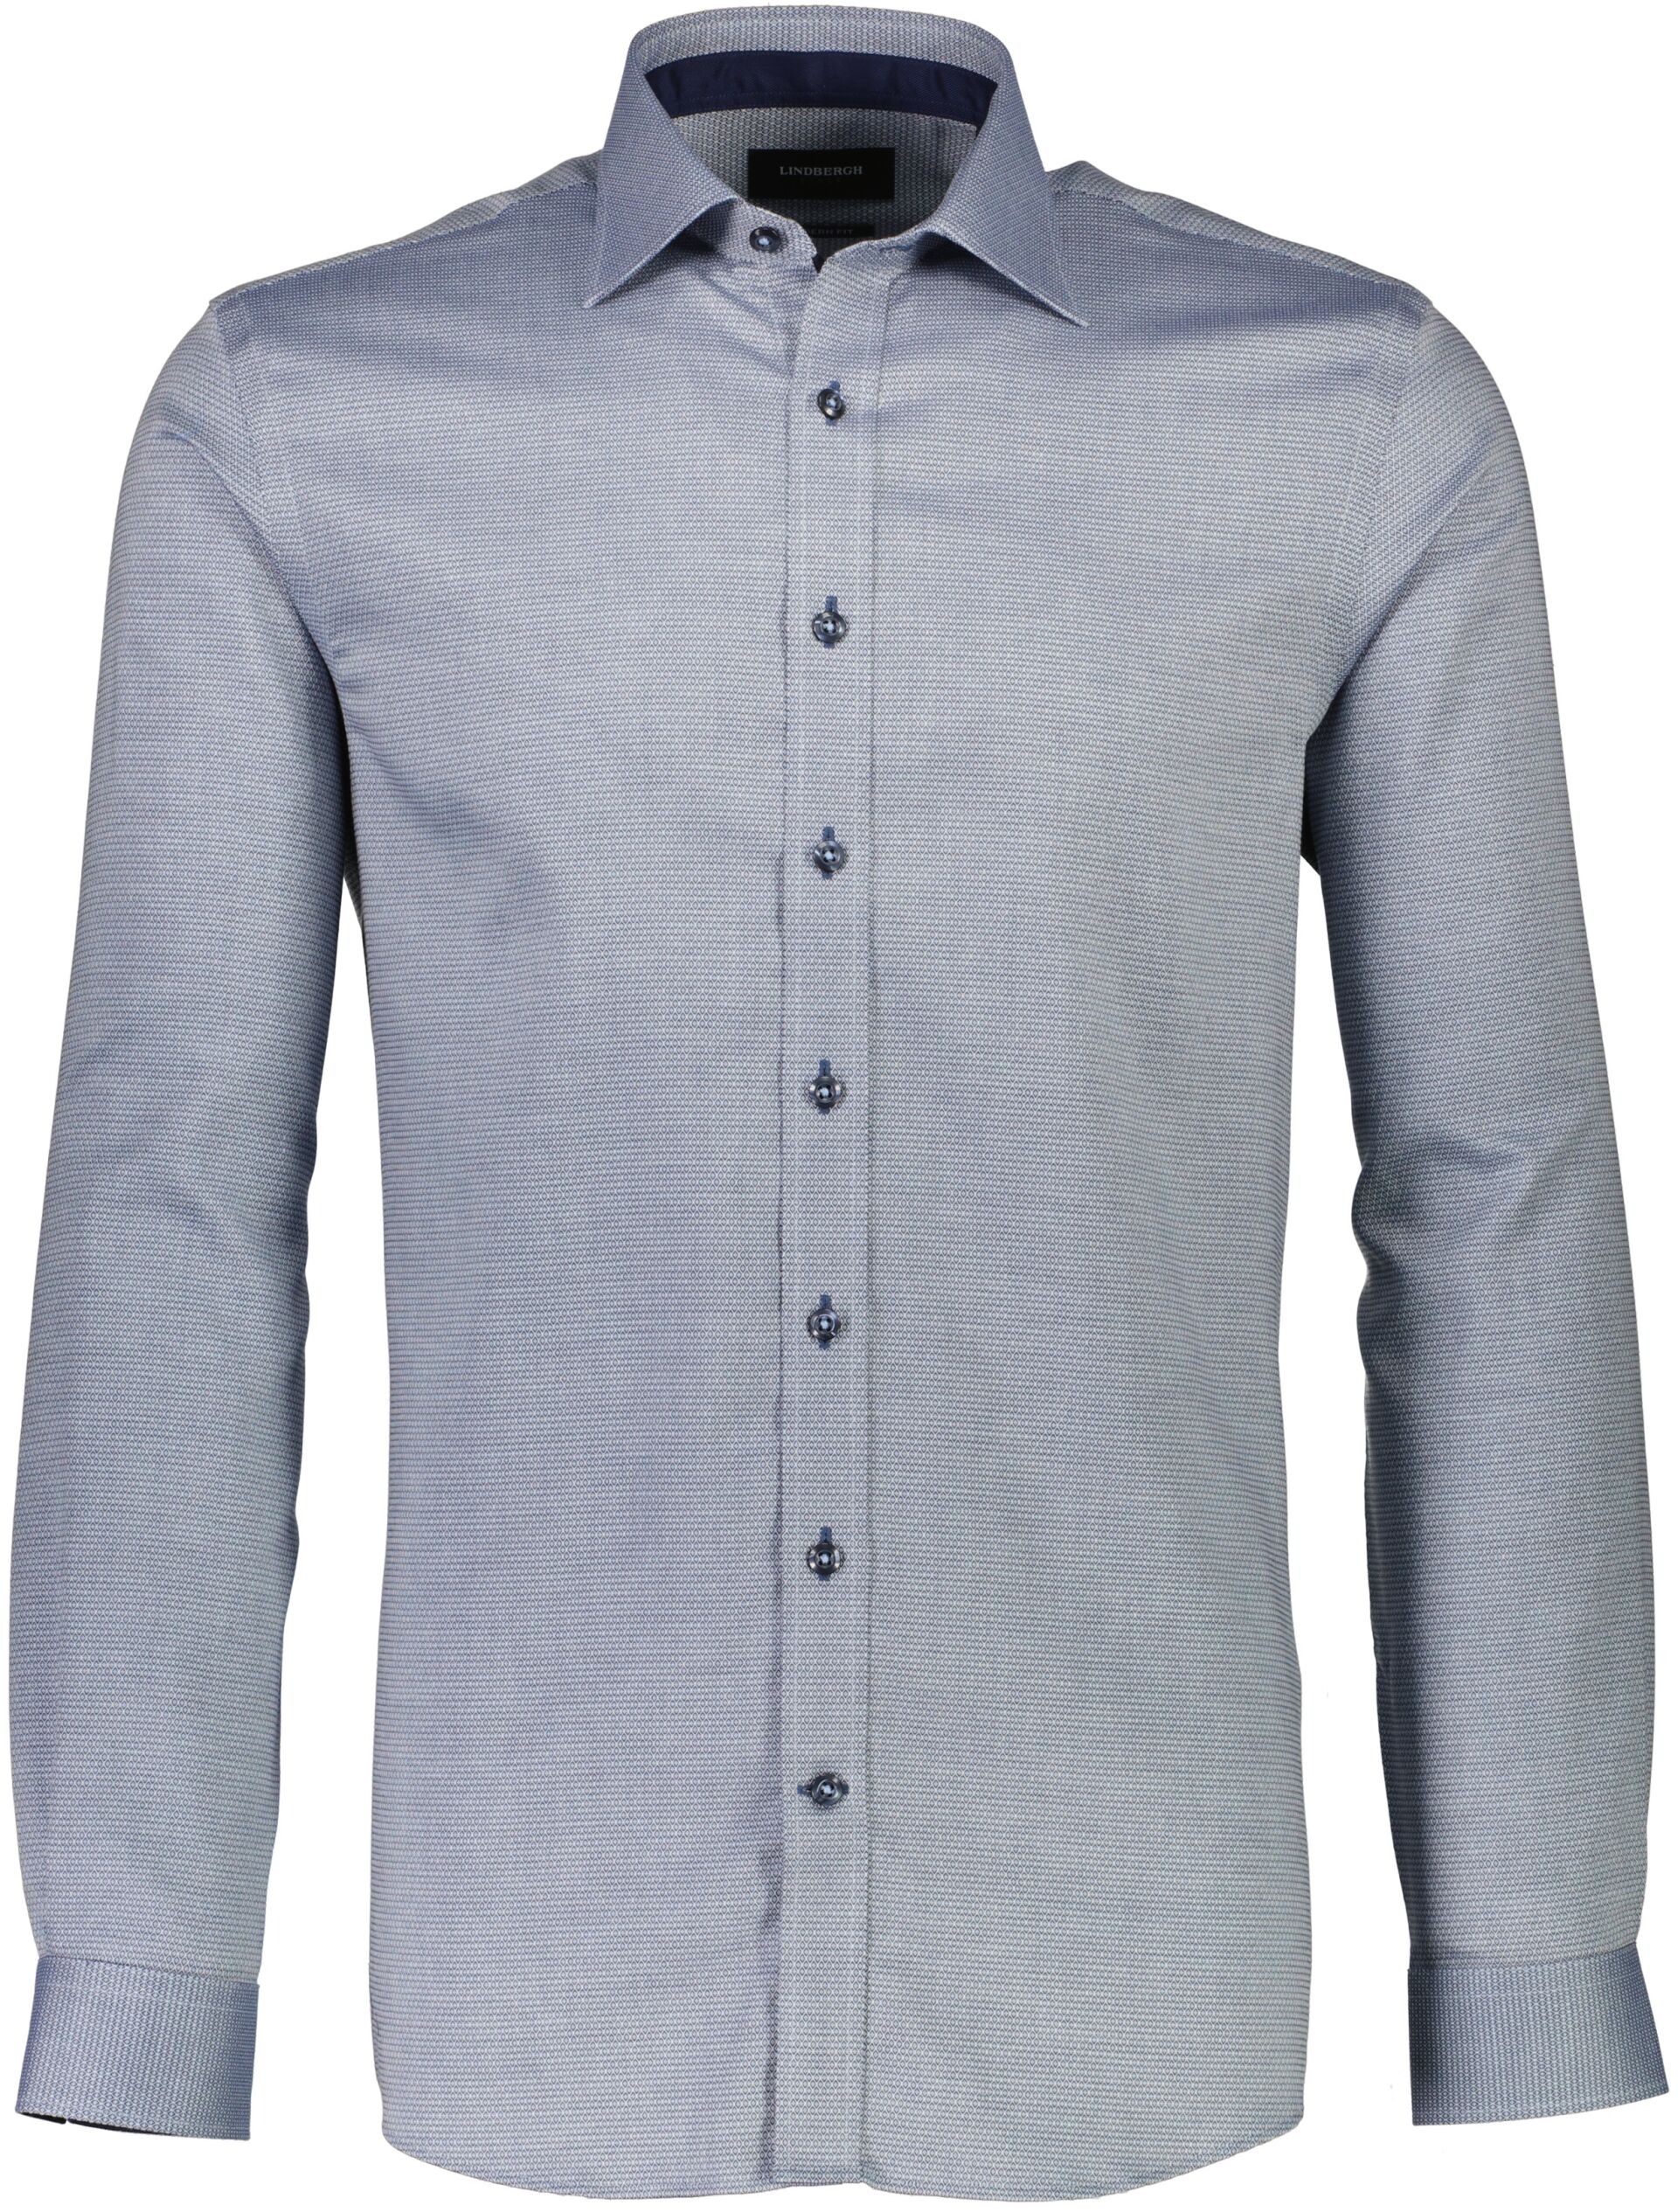 Business casual shirt 30-242178